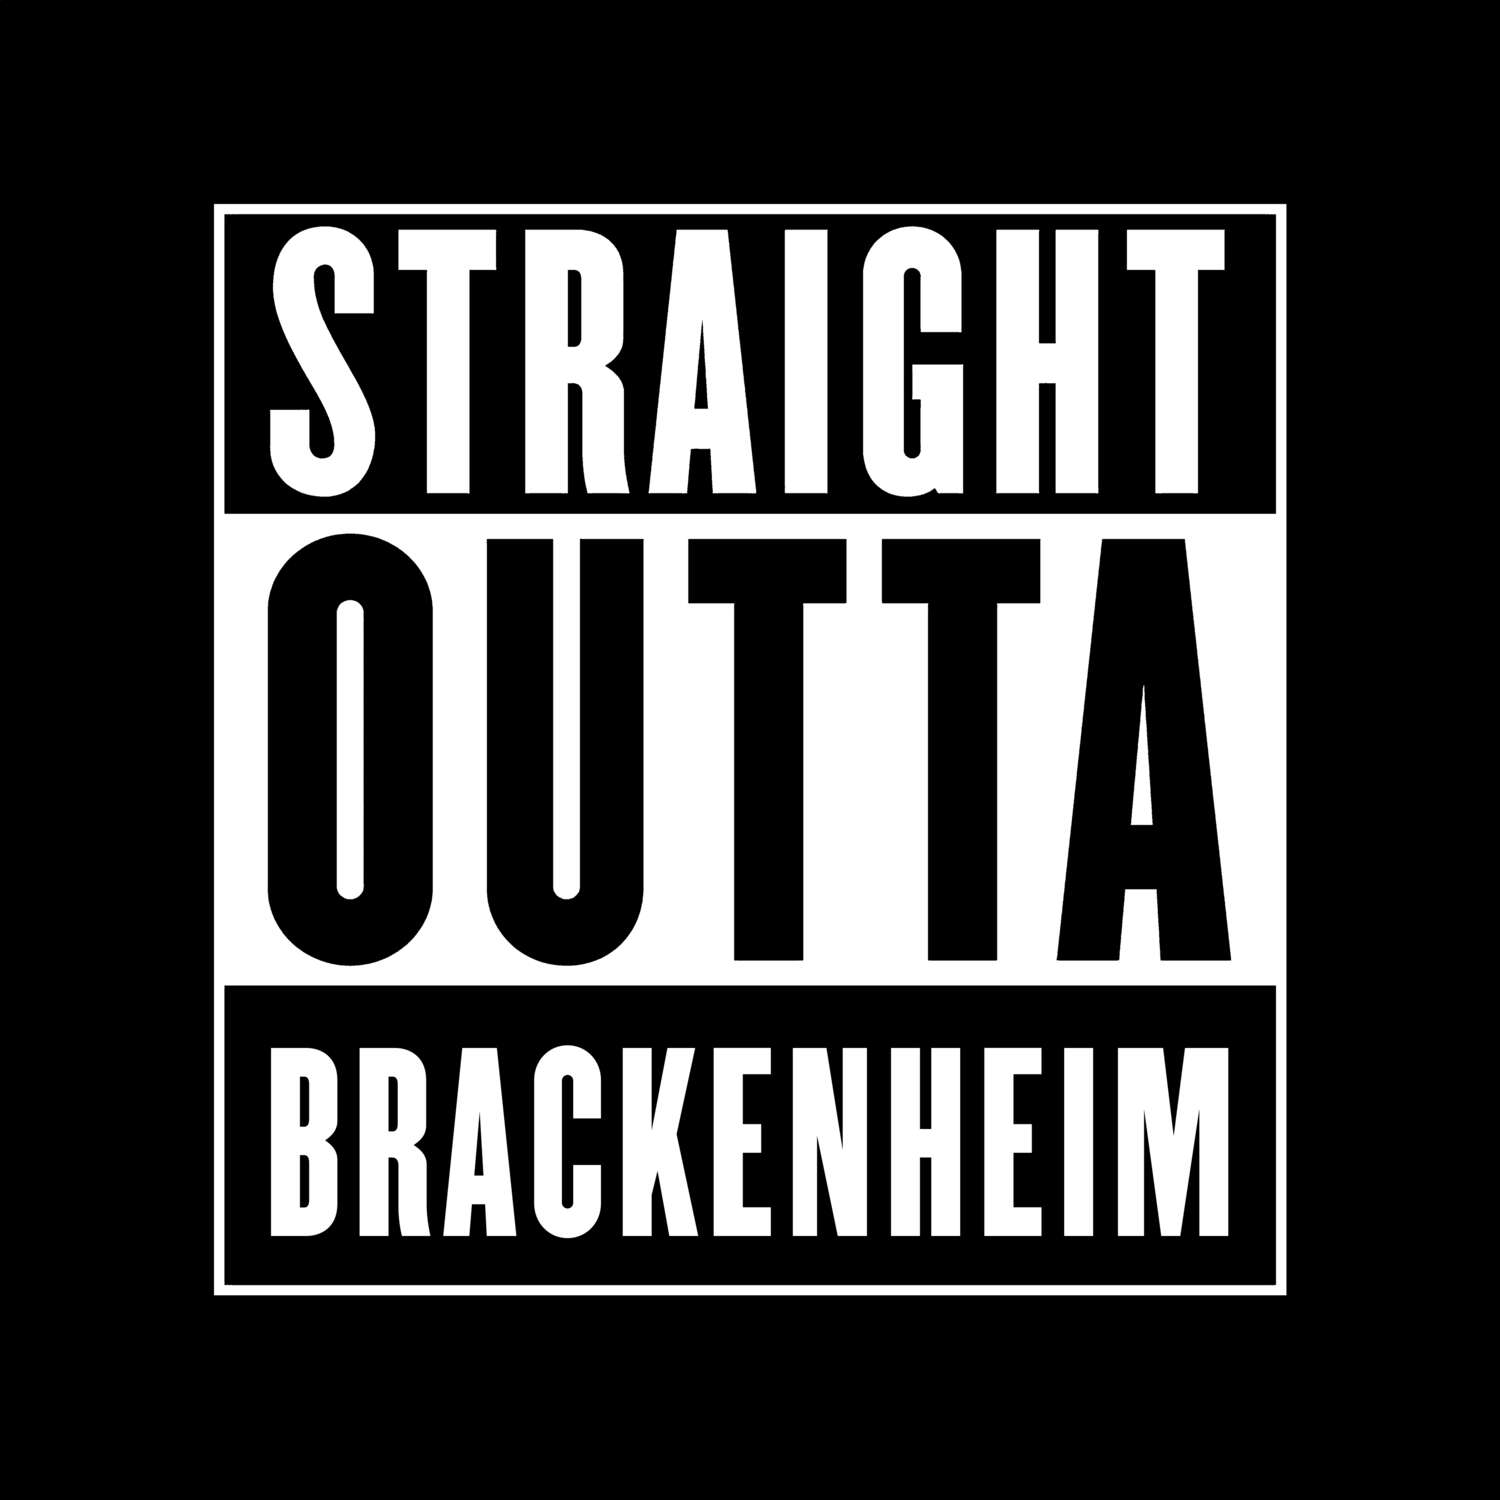 Brackenheim T-Shirt »Straight Outta«